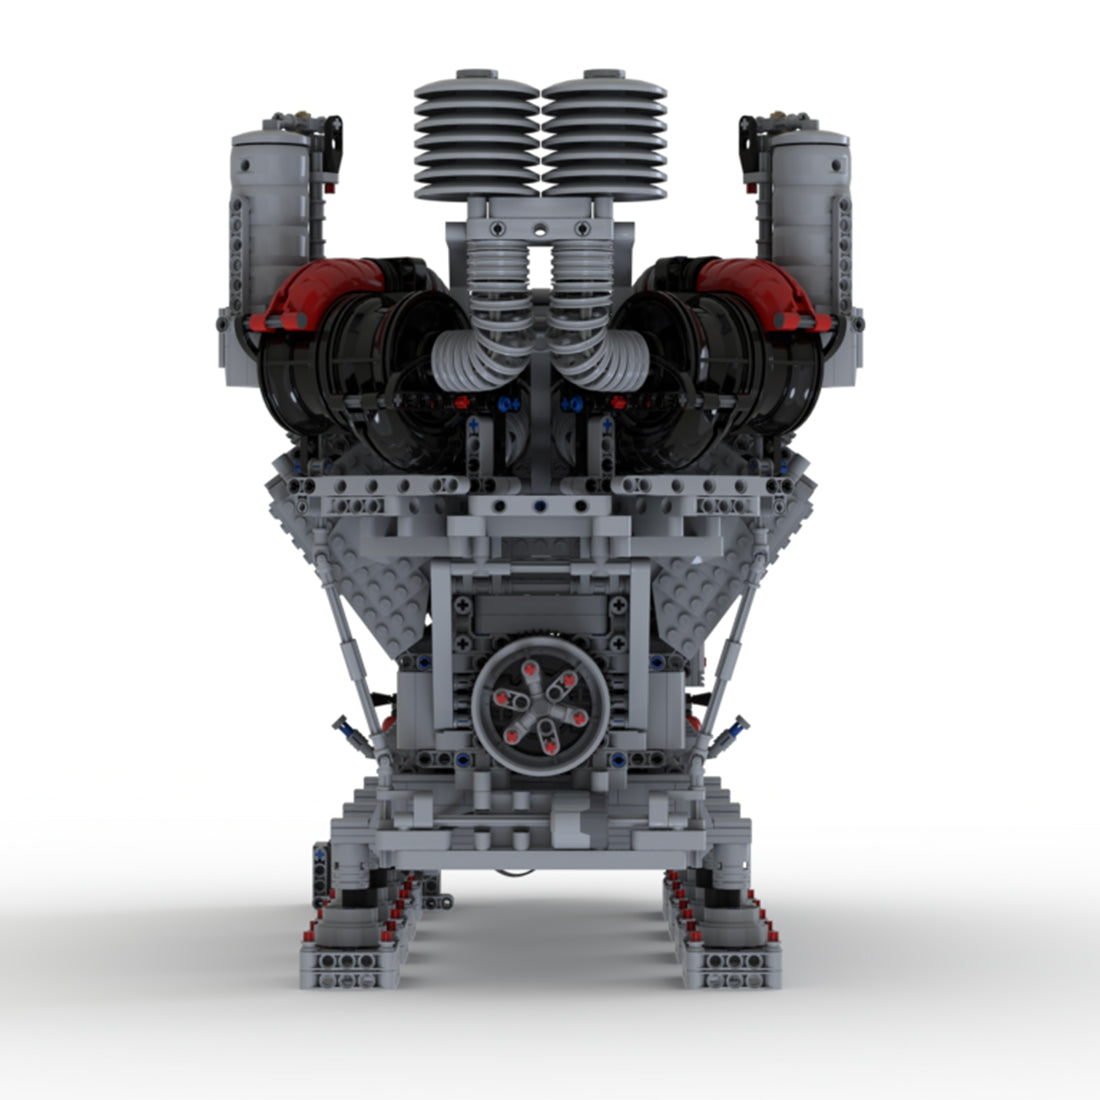 cat 3616 v16 diesel engine model building blocks